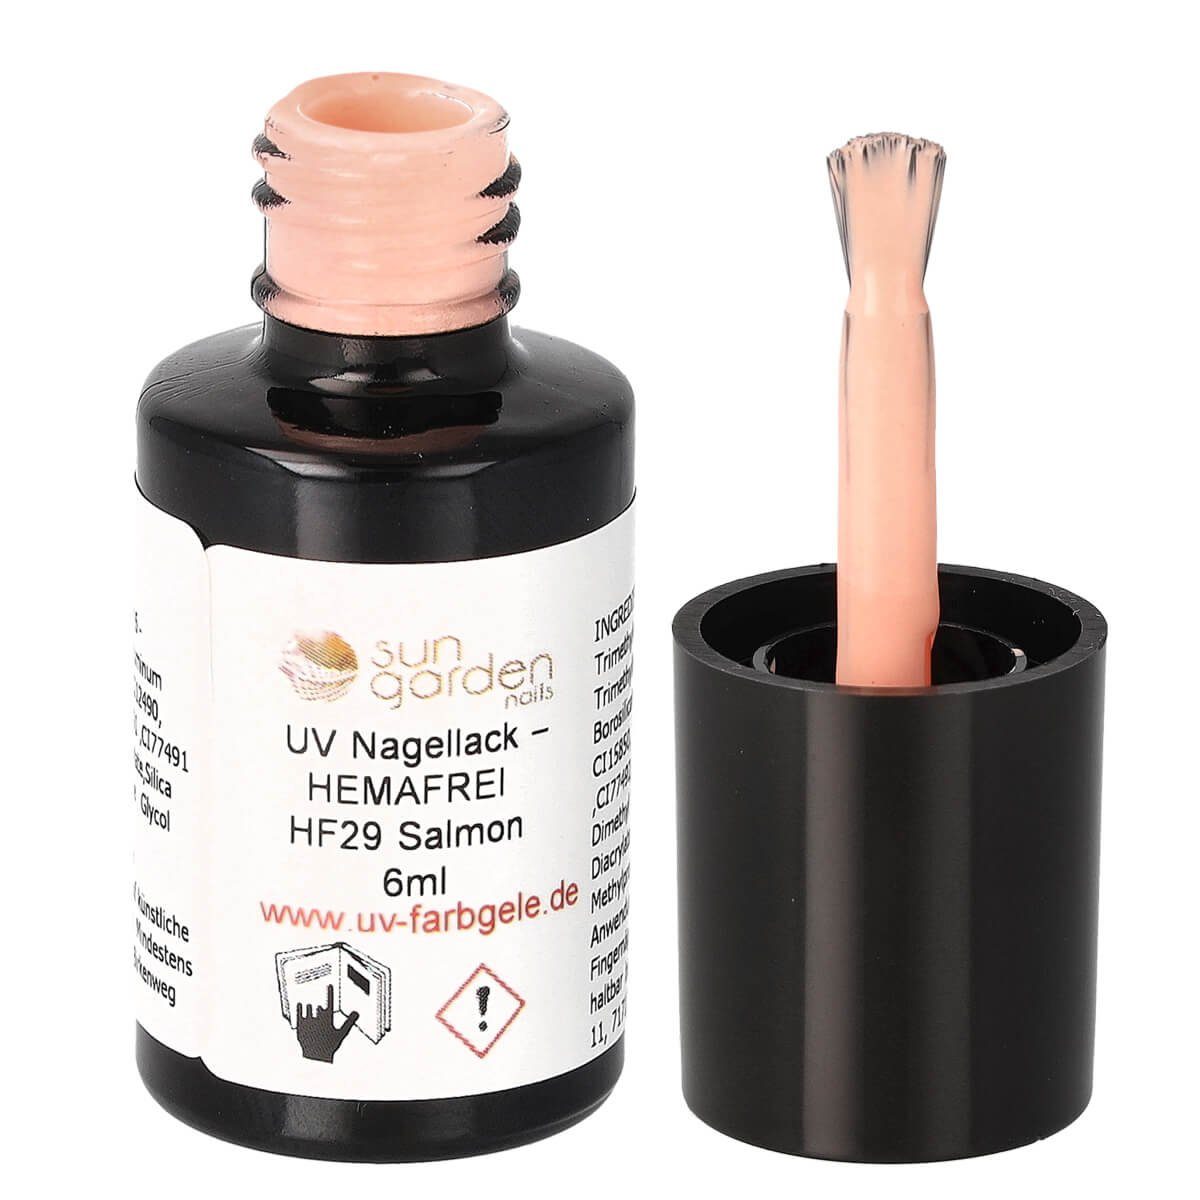 Sun Garden Nails – - HF29 Salmon 6ml HEMAFREI UV Nagellack Nagellack